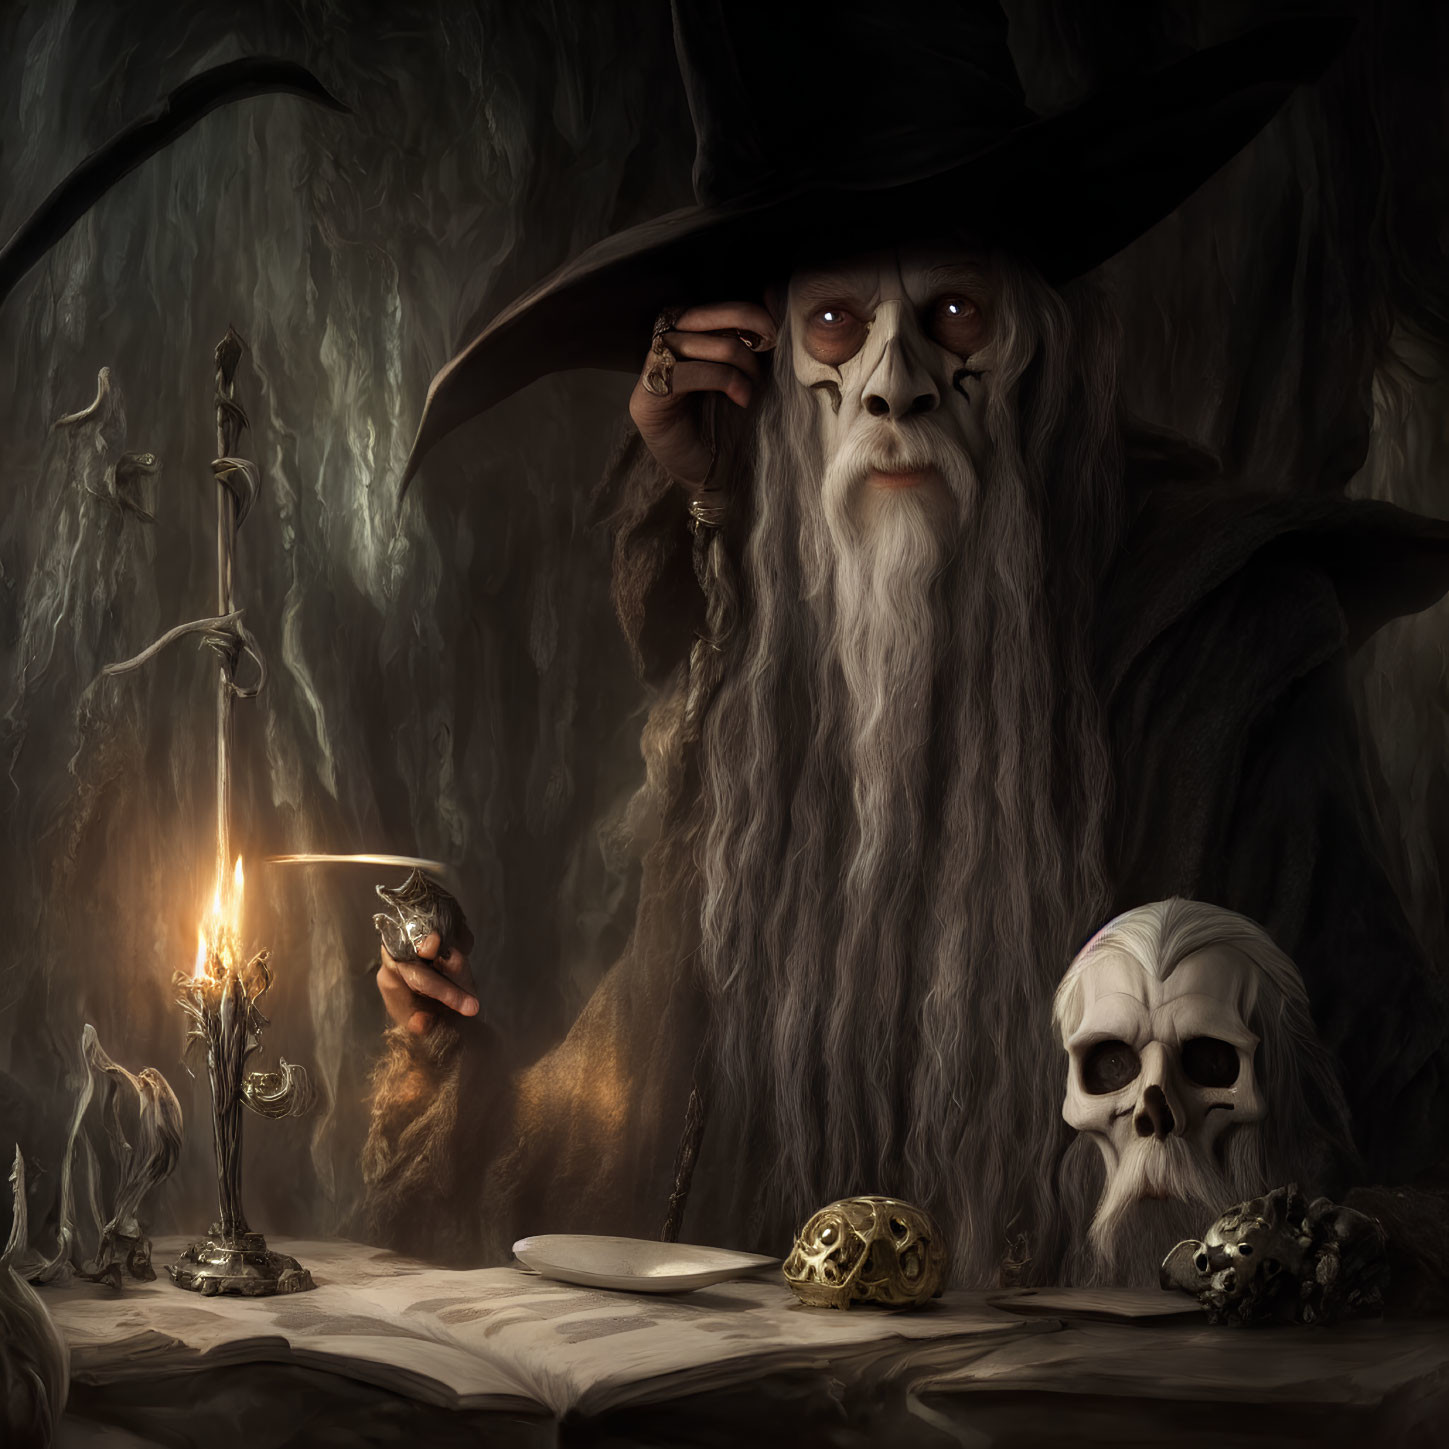 Elderly wizard with long beard, hat, candlestick, open book, skulls, melting candles